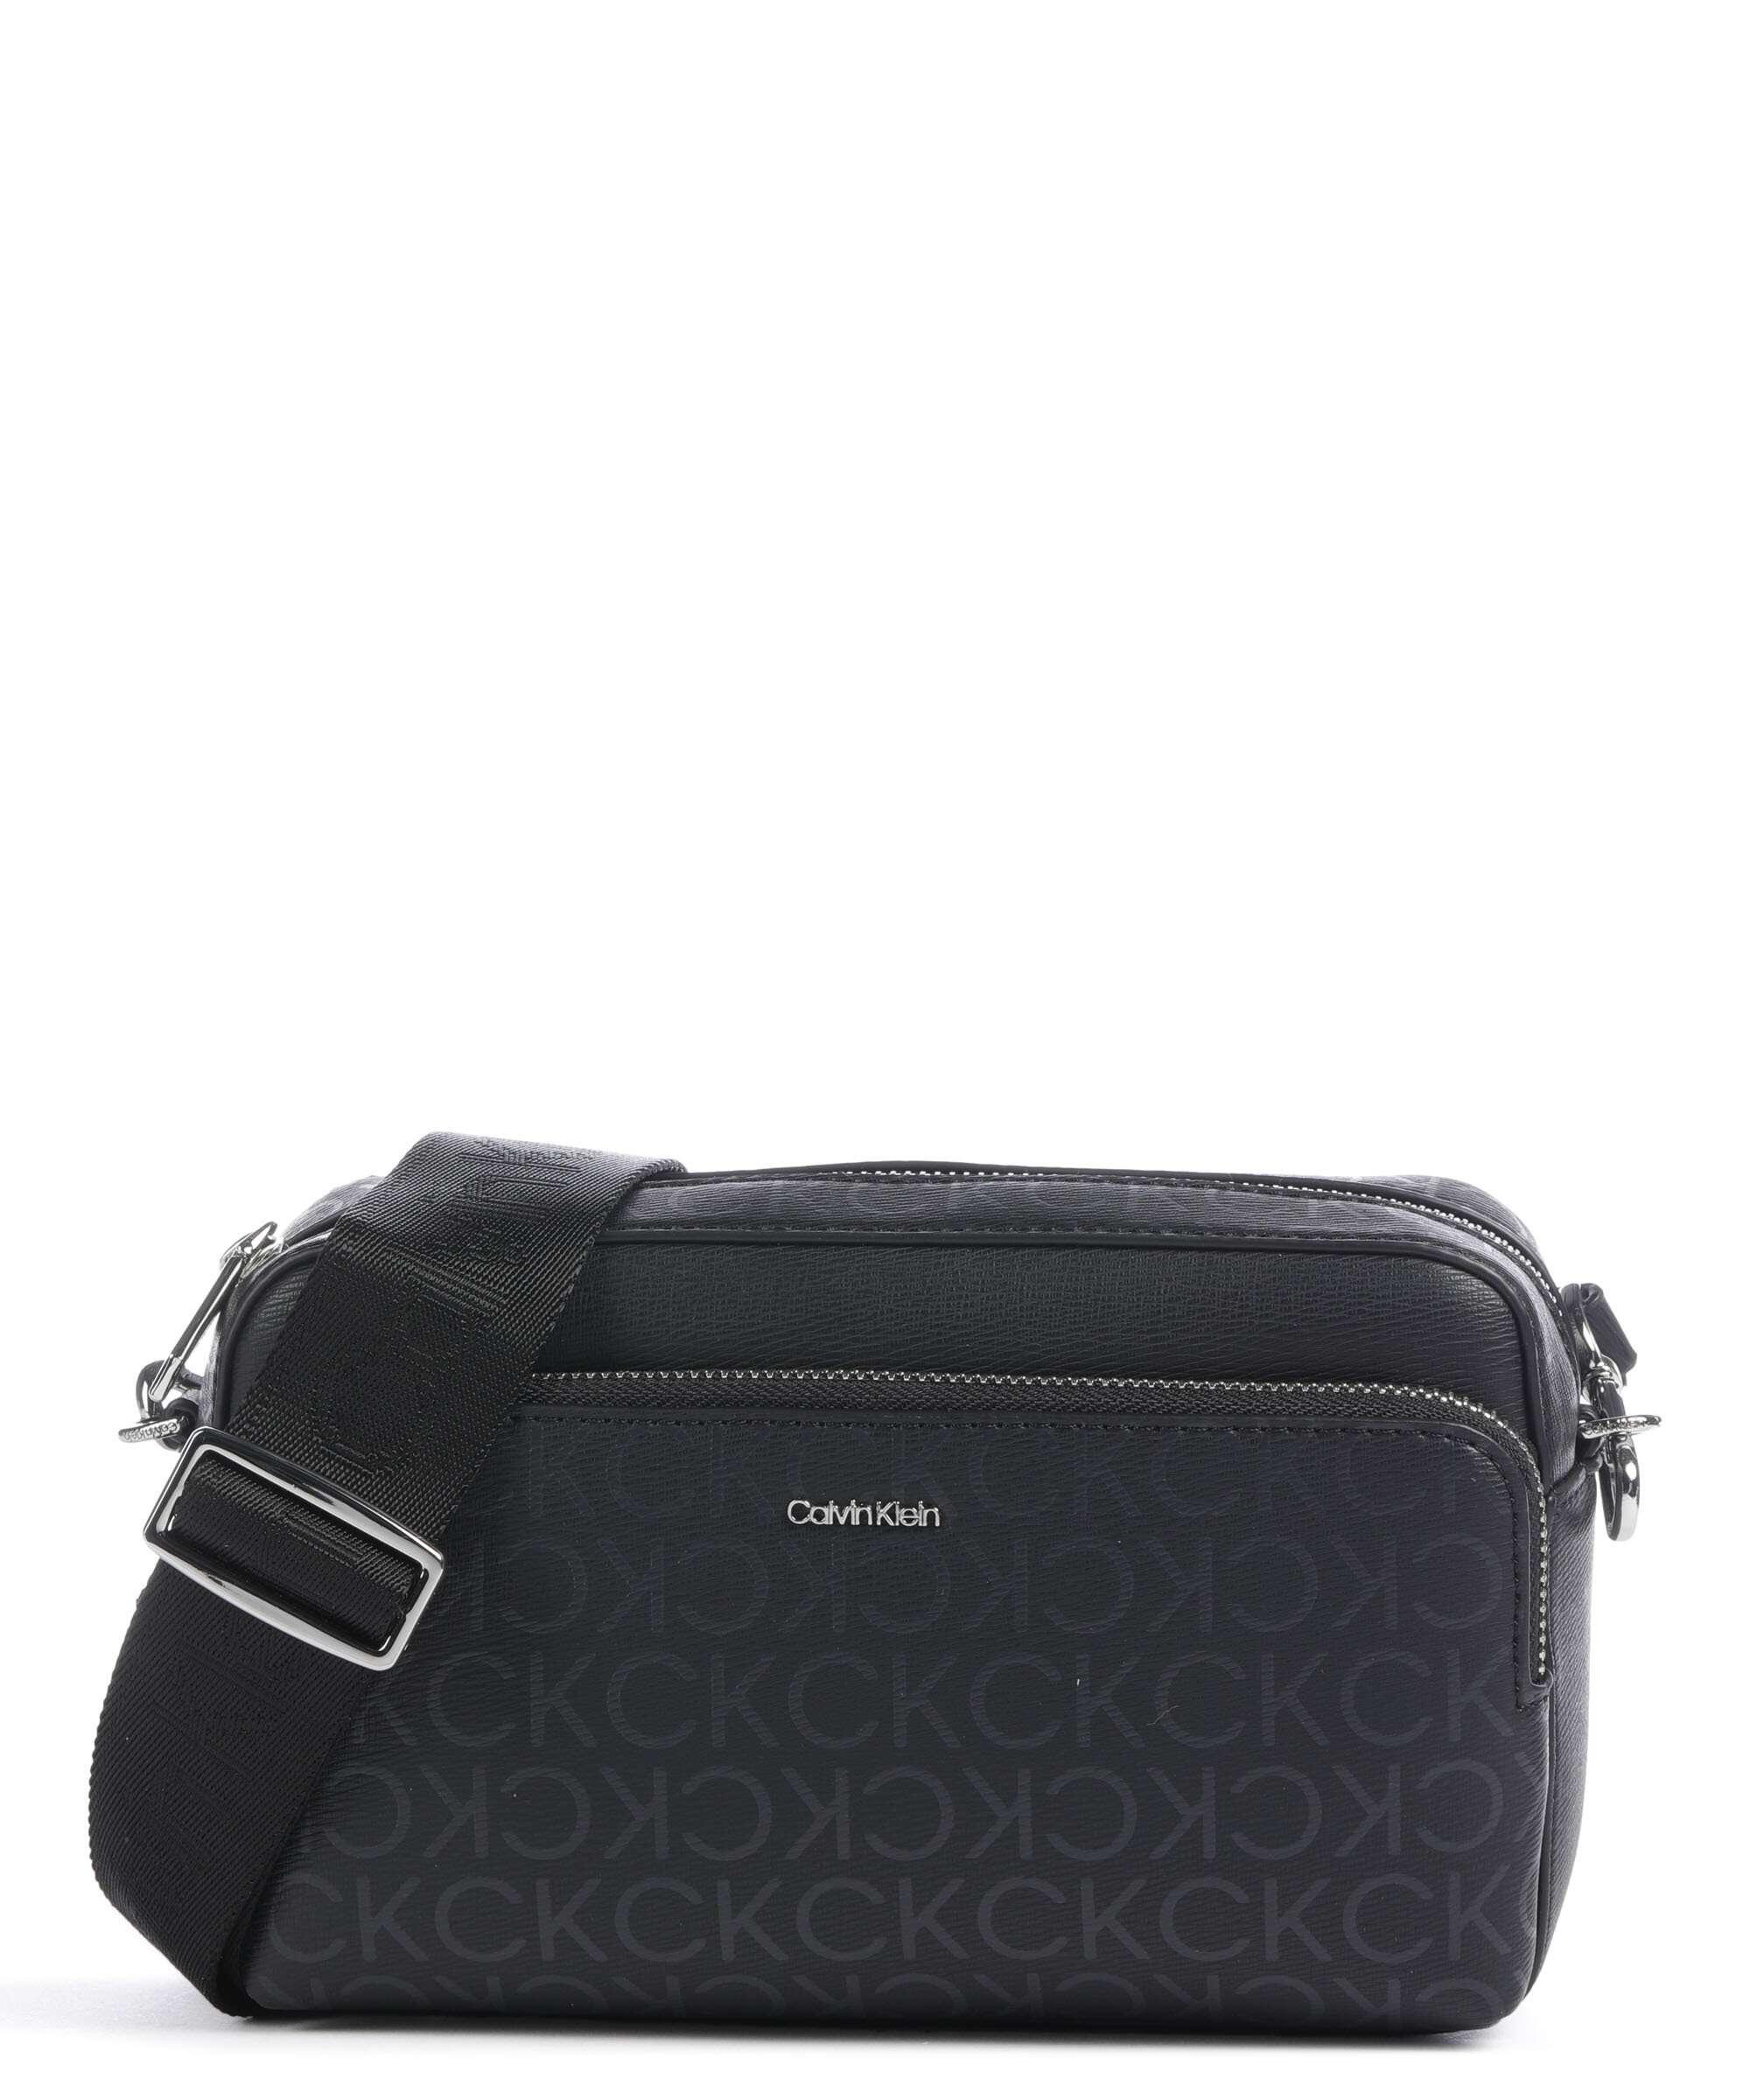 Calvin Klein Purse | Purses, Calvin, Leather purses